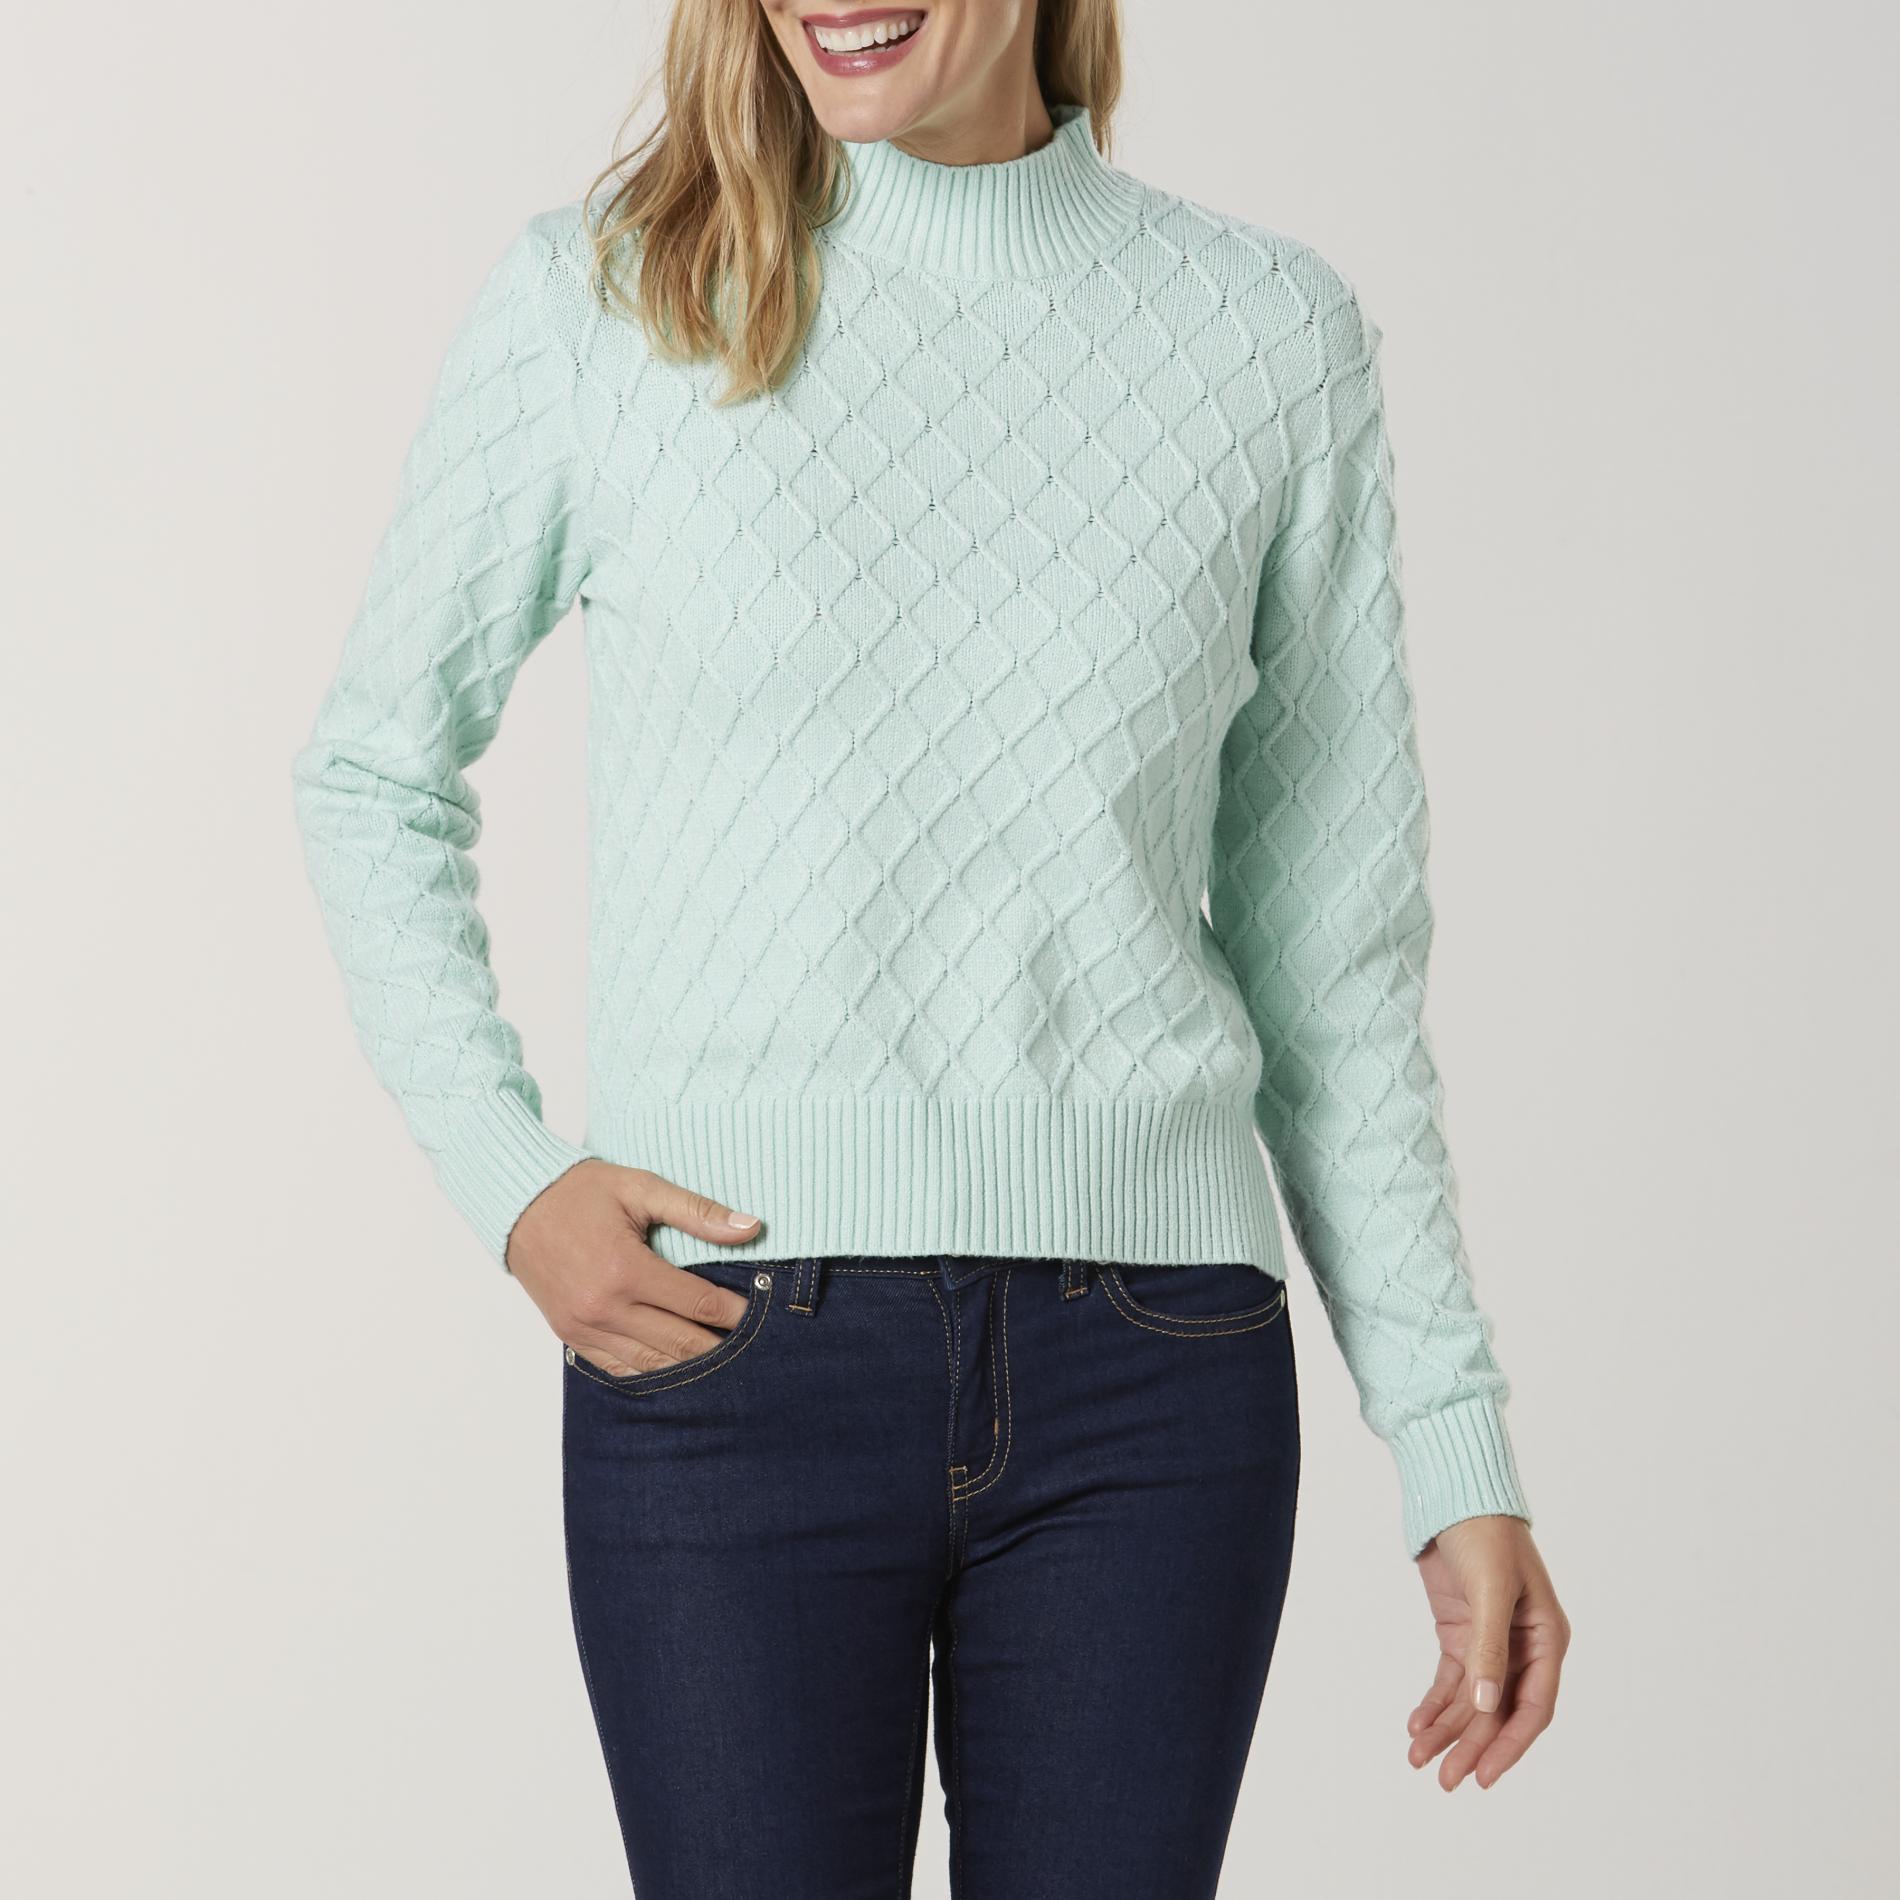 Basic Editions Women's Textured Mock Turtleneck Sweater